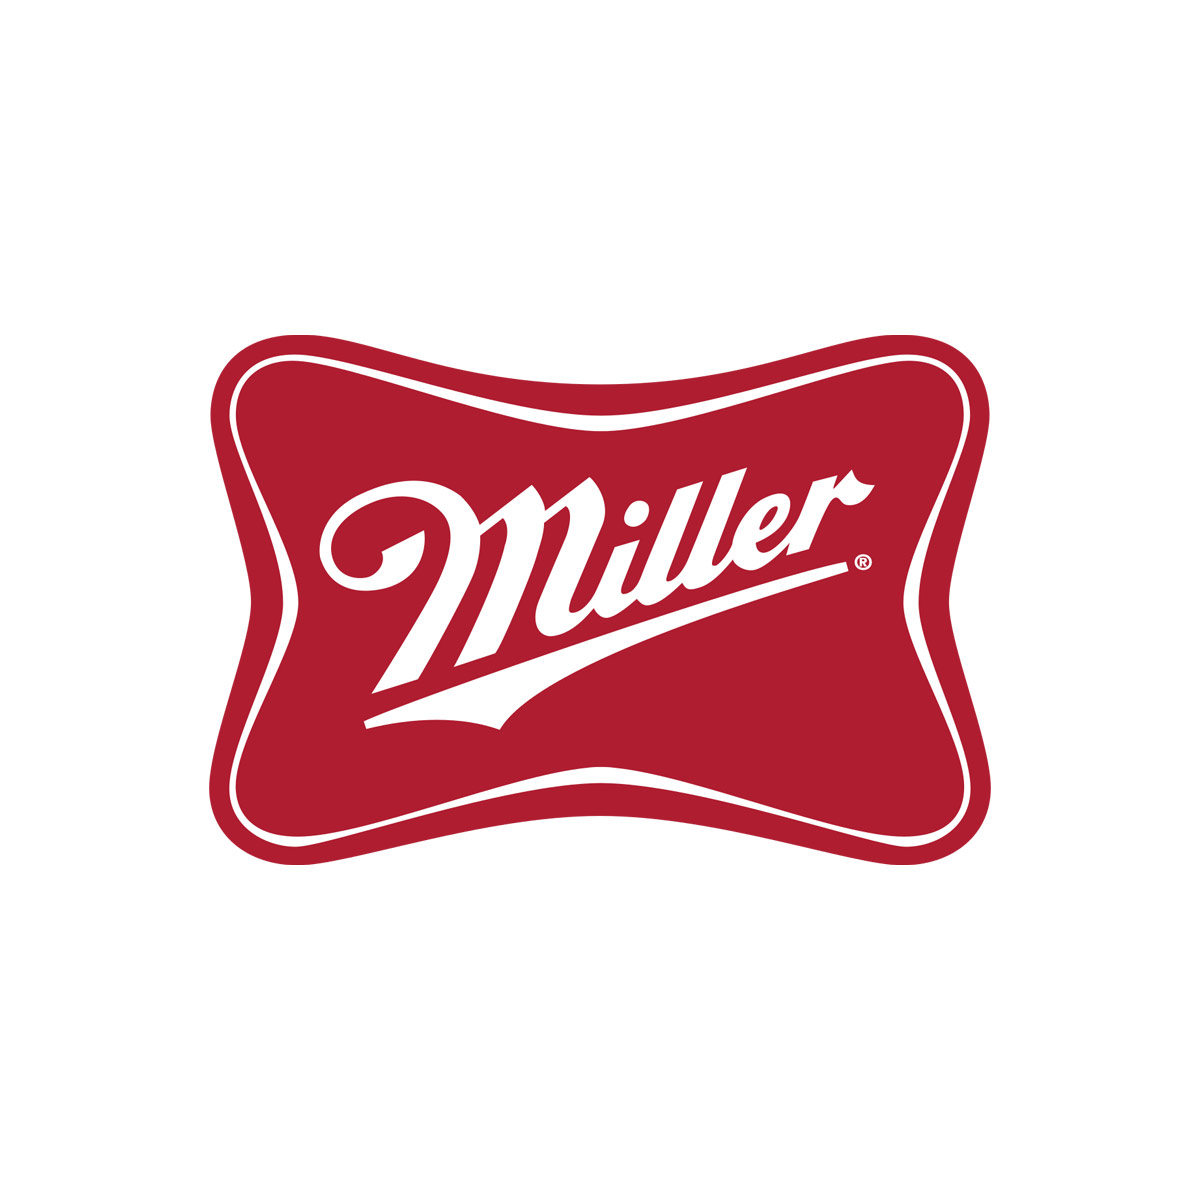 Miller Brewing